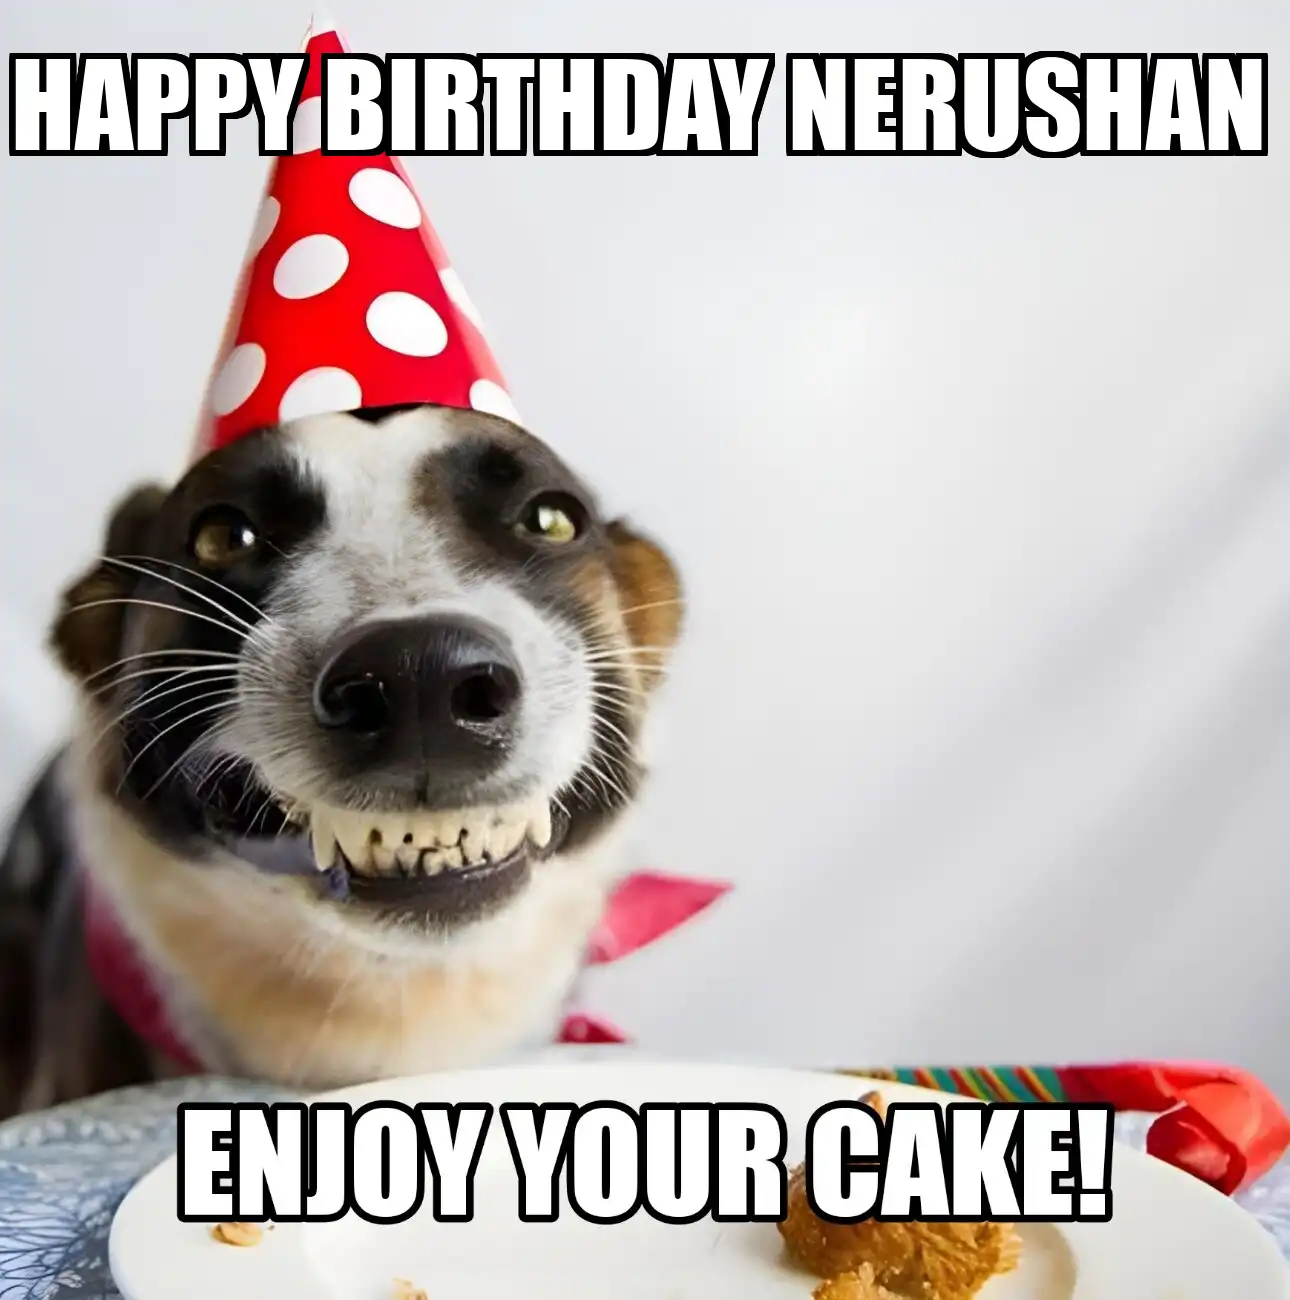 Happy Birthday Nerushan Enjoy Your Cake Dog Meme